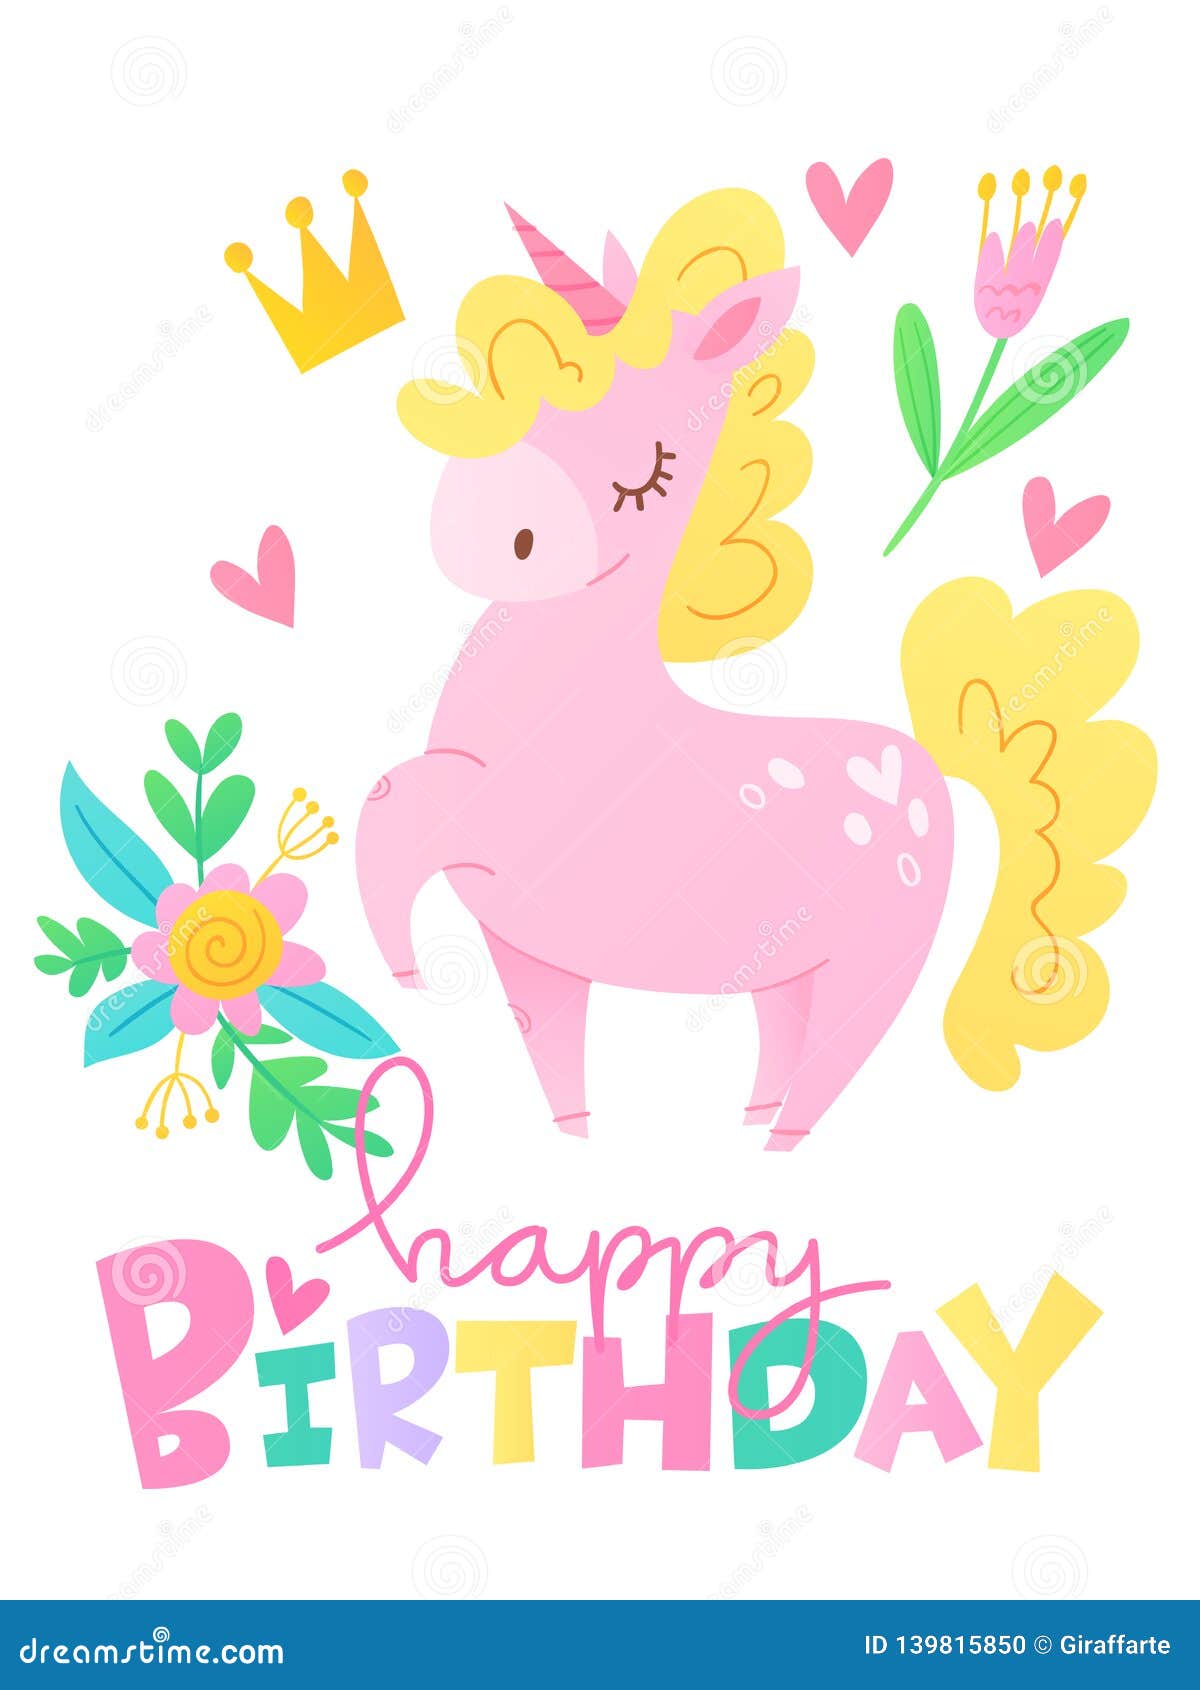 Vector Happy Birthday Cards with Cartoon Unicorn Character Stock Vector ...